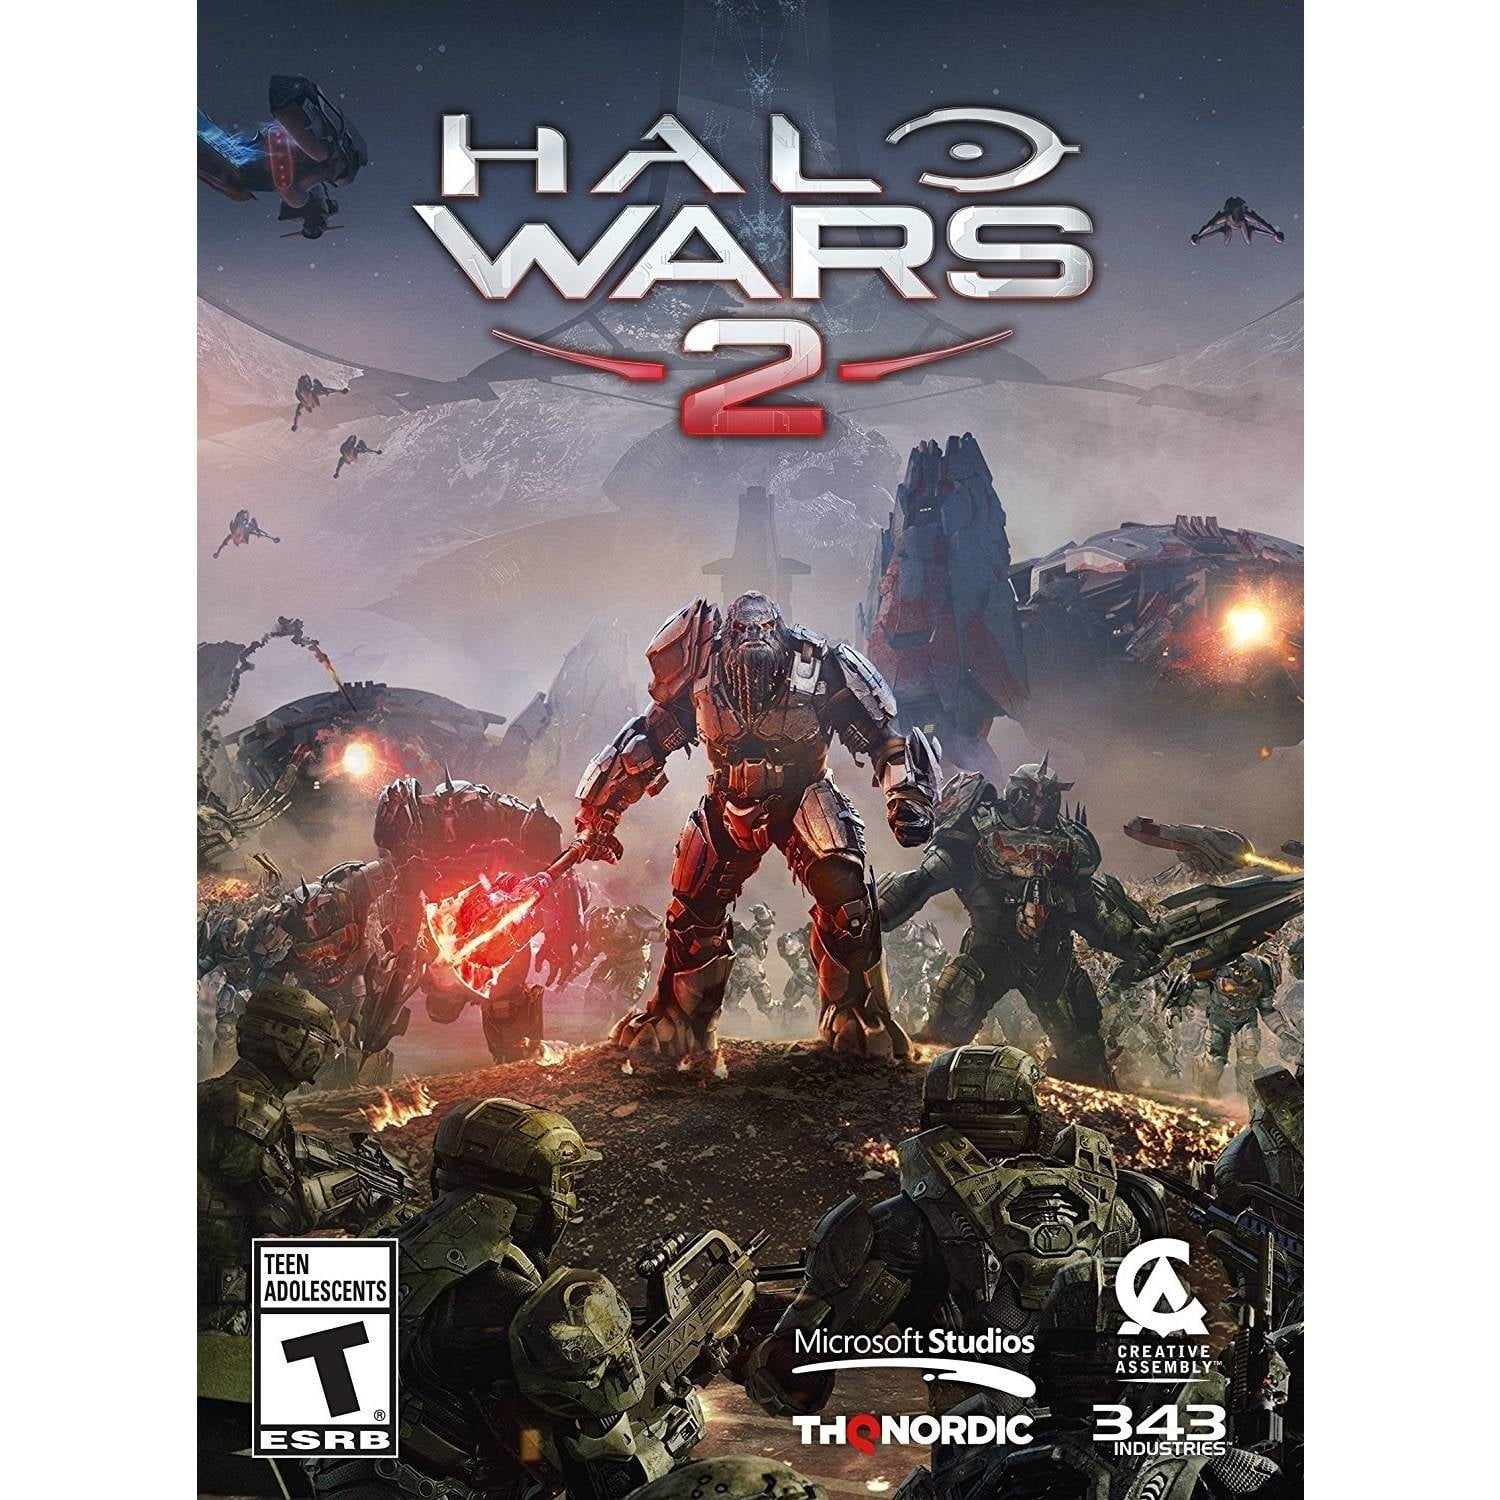 halo wars 2 ultimate edition walmart